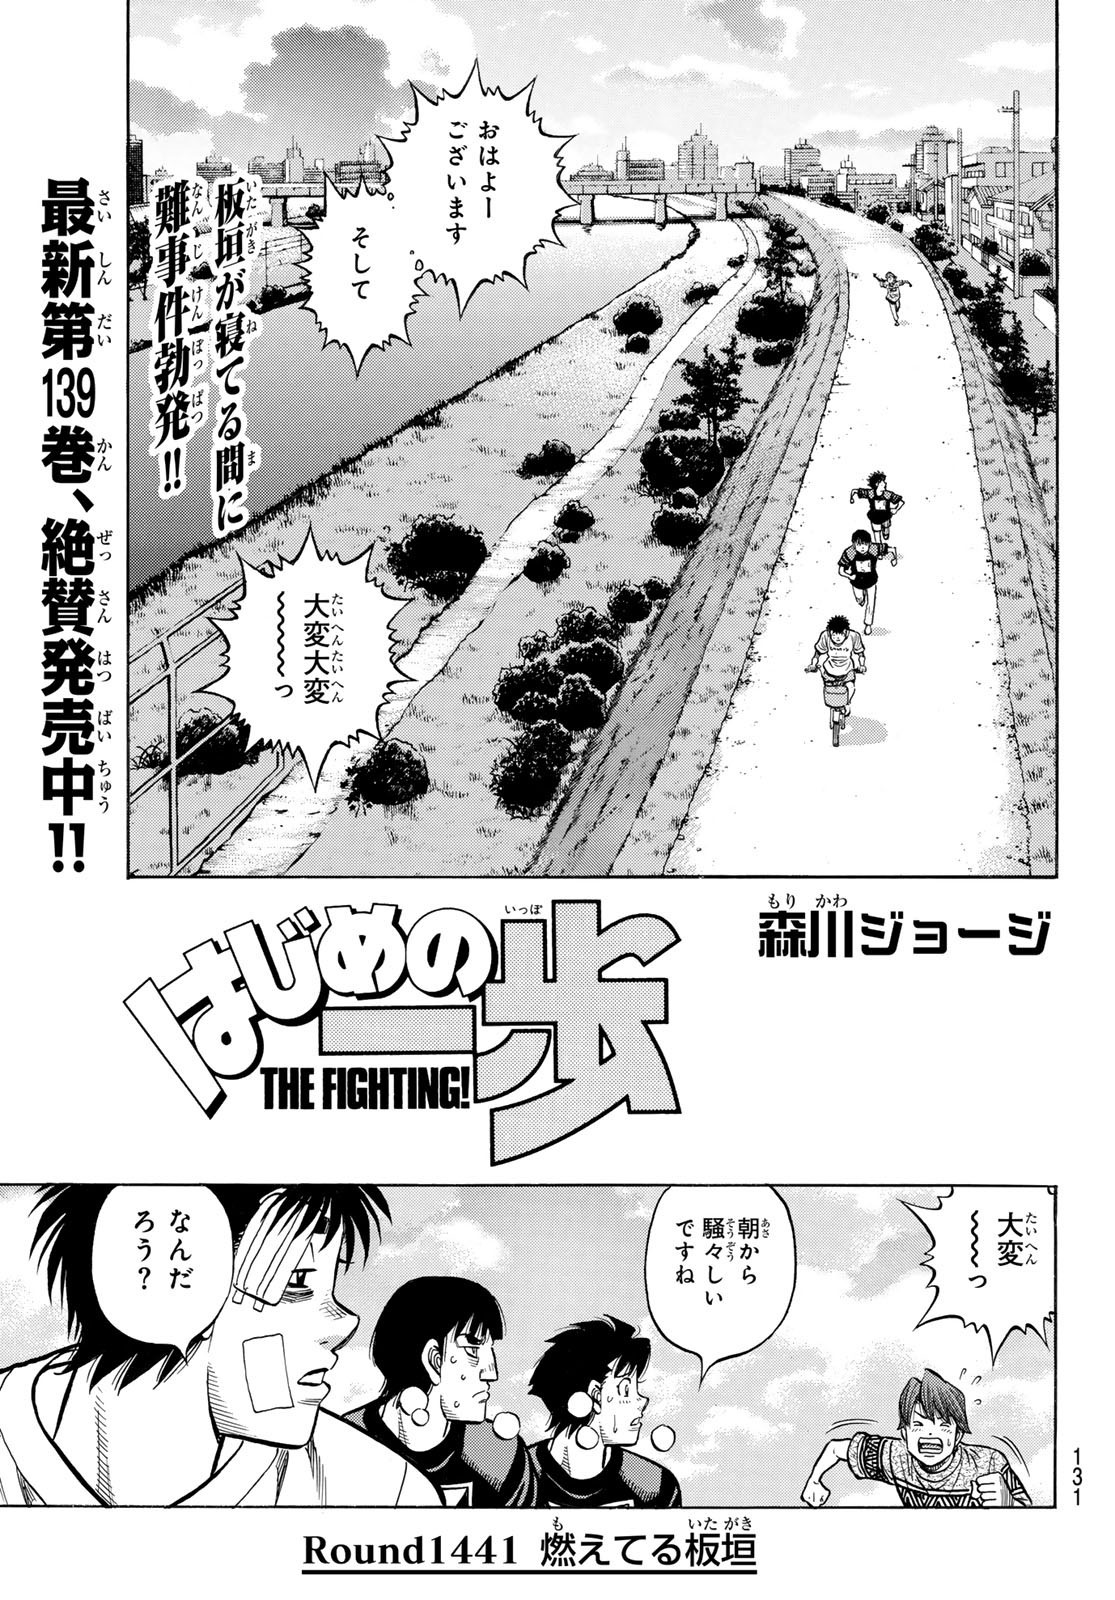 Hajime no Ippo - Chapter 1441 - Page 1